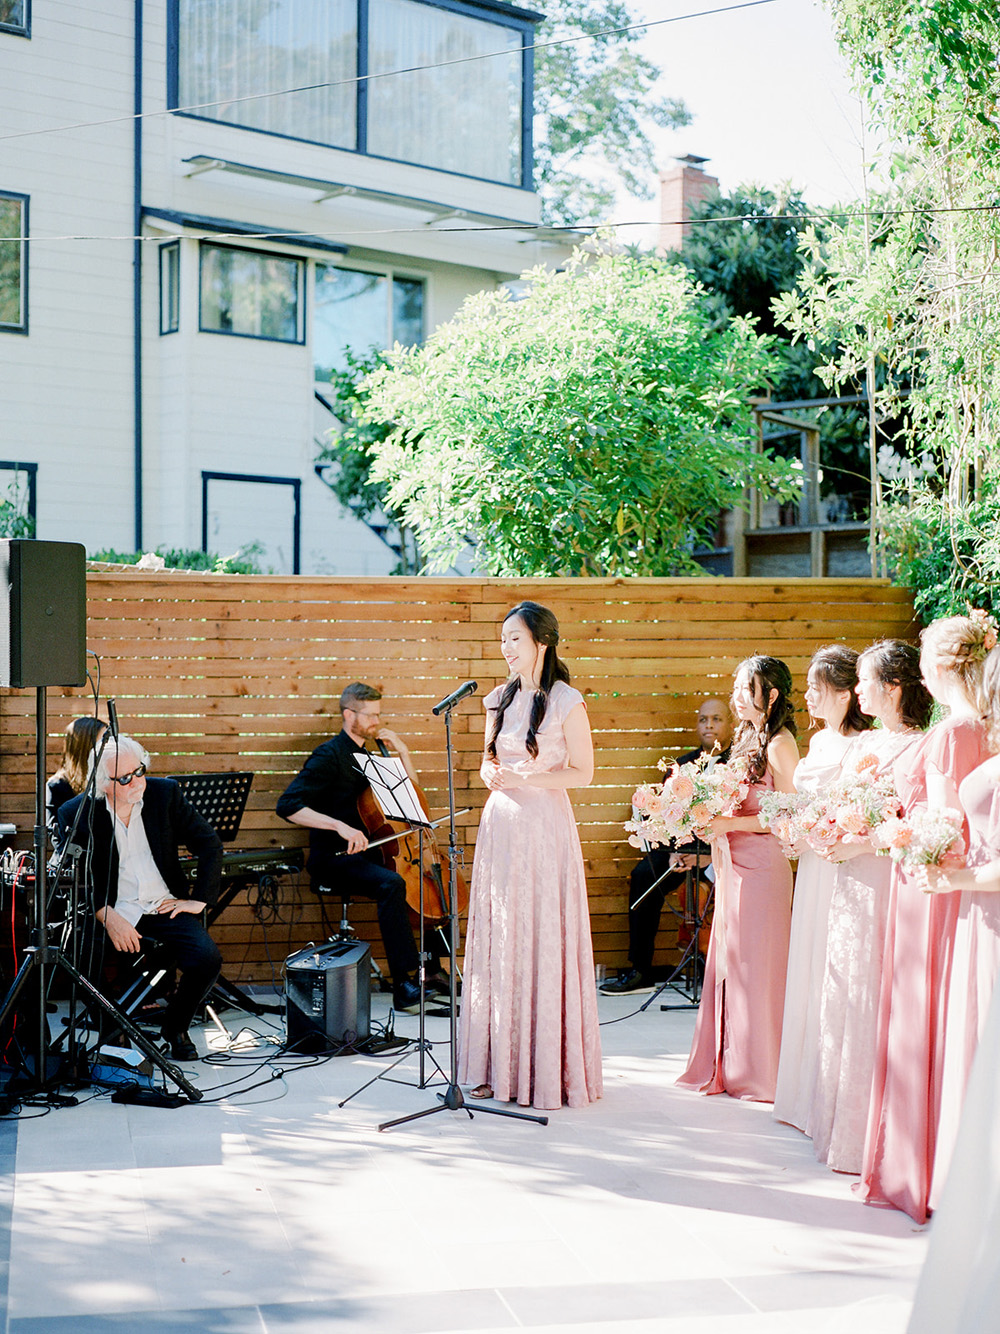 pink bridal party in backyard wedding ceremony